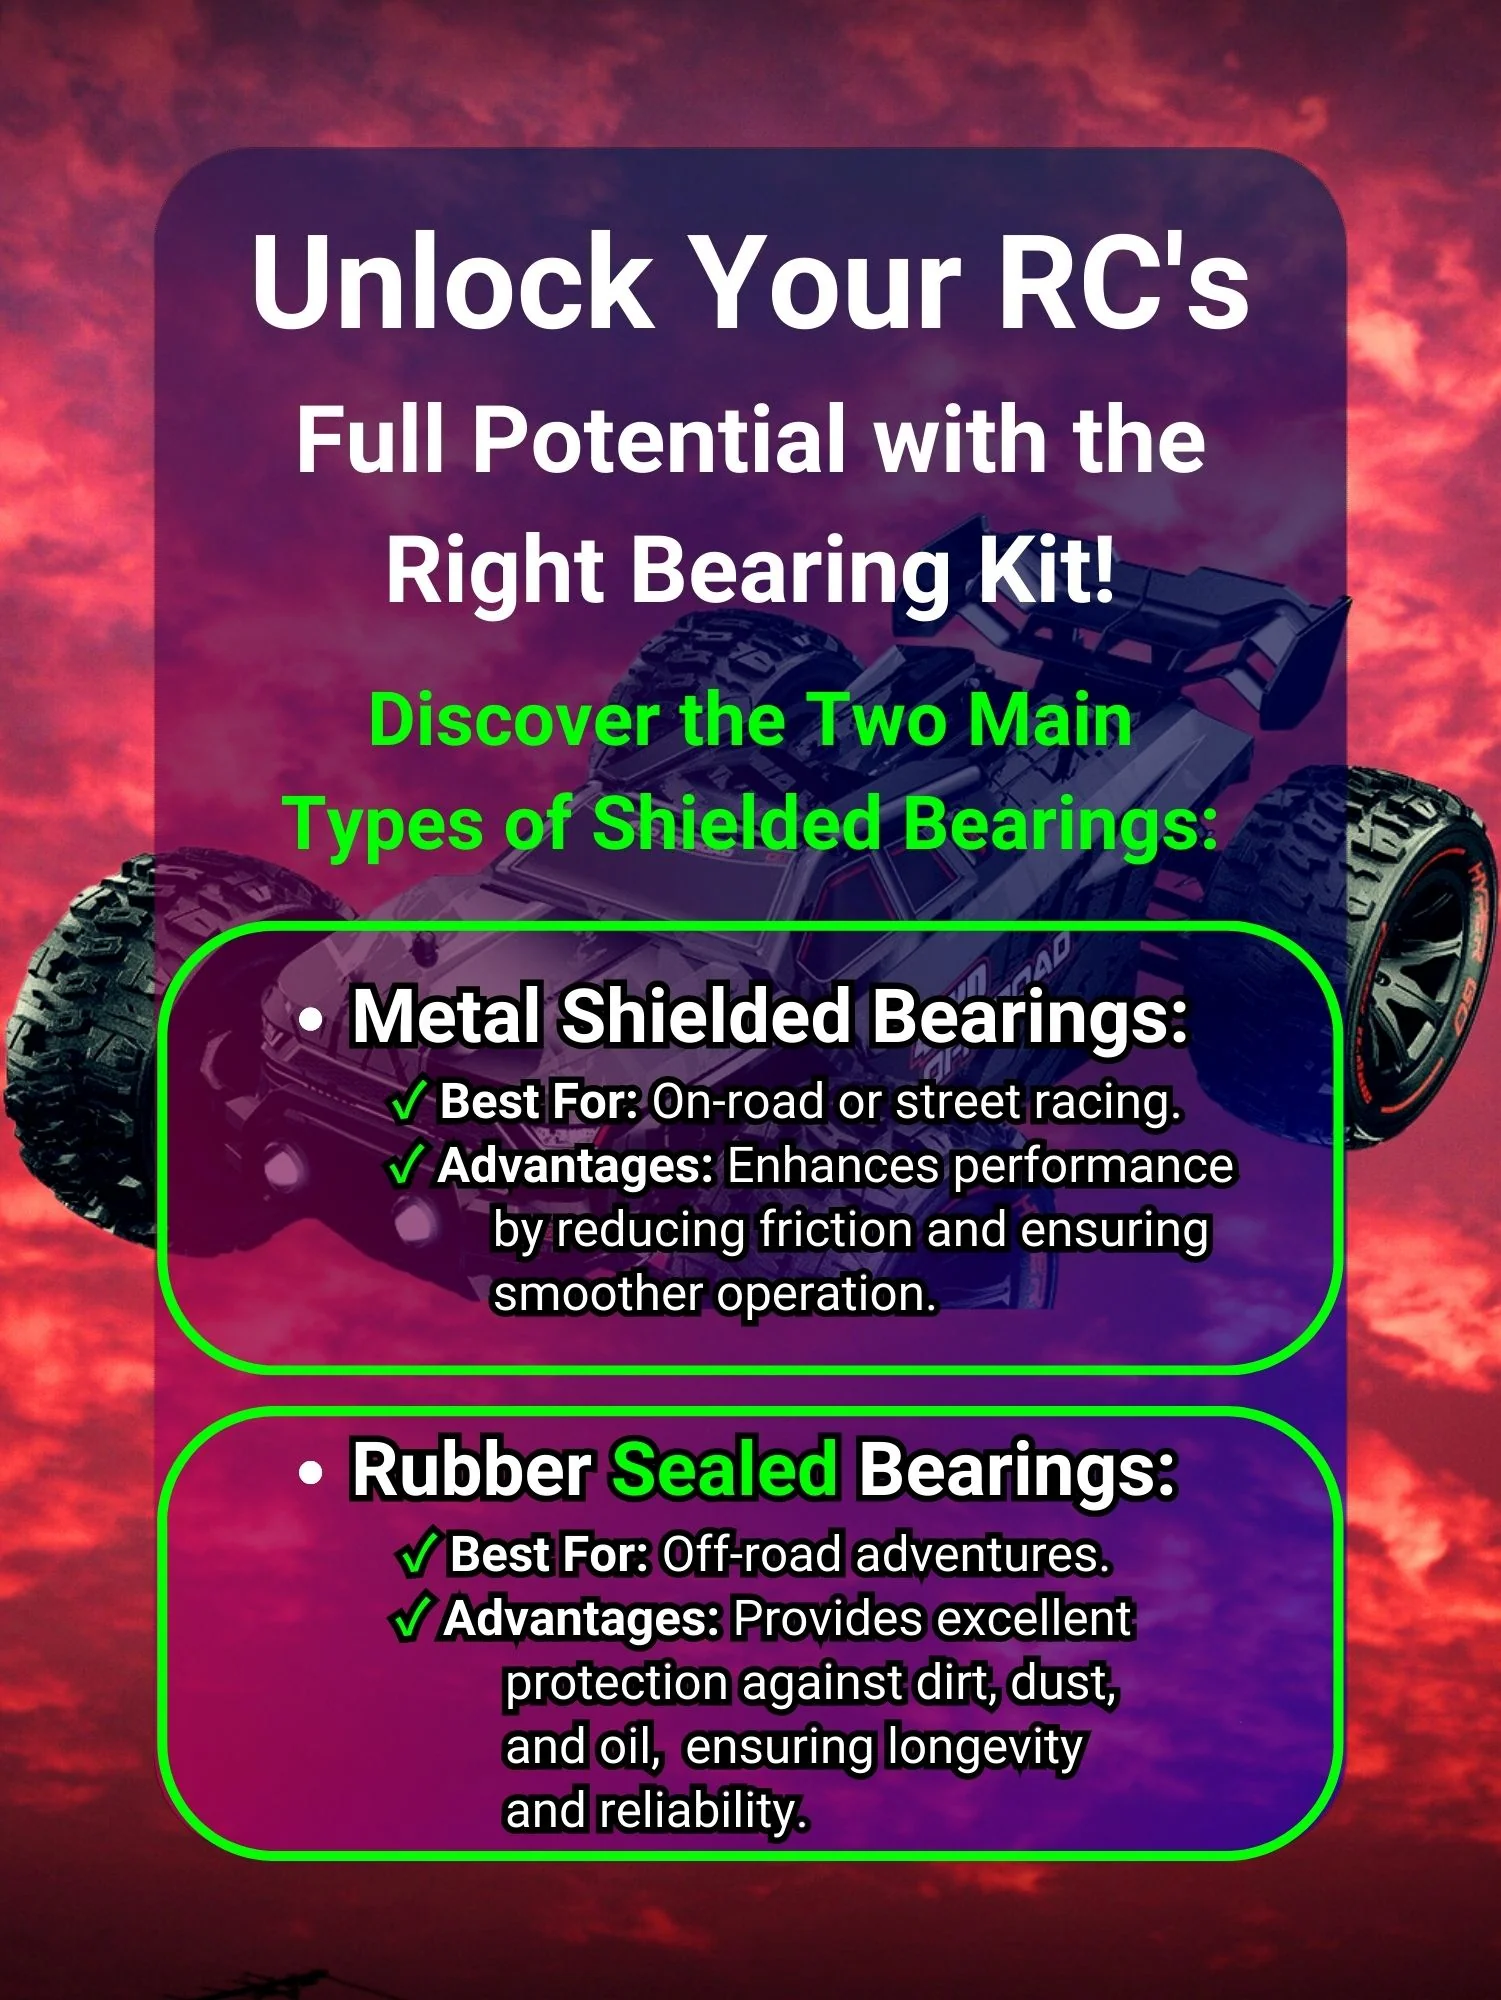 RCScrewZ Metal Shielded Bearings alg049b for Align T-REX 300X #RH30E0102XT Heli - Picture 2 of 12